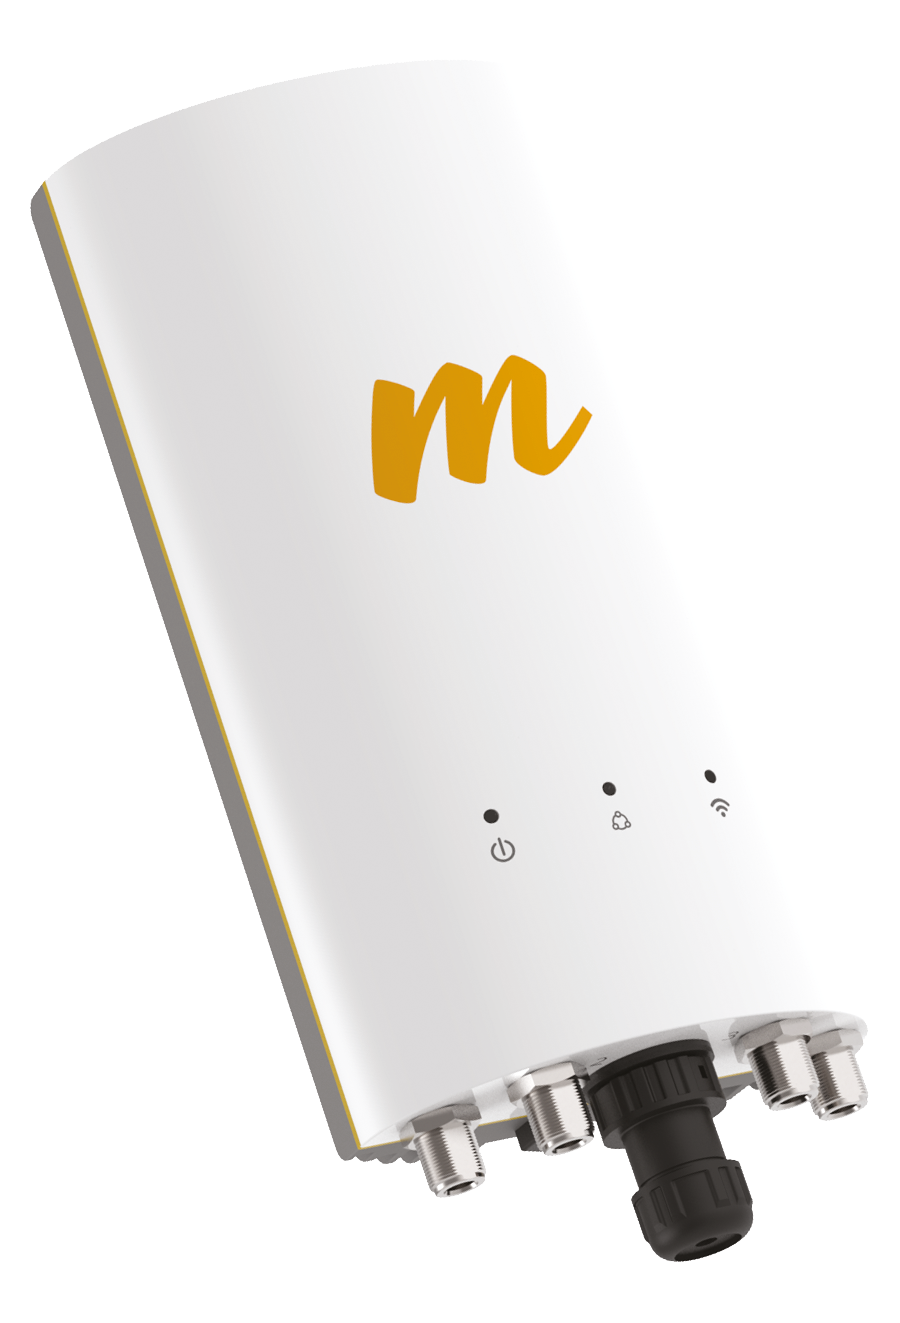 Mimosa A5c, radio do access pointa, 5GHz, AC, 4x4 MIMO, GPS